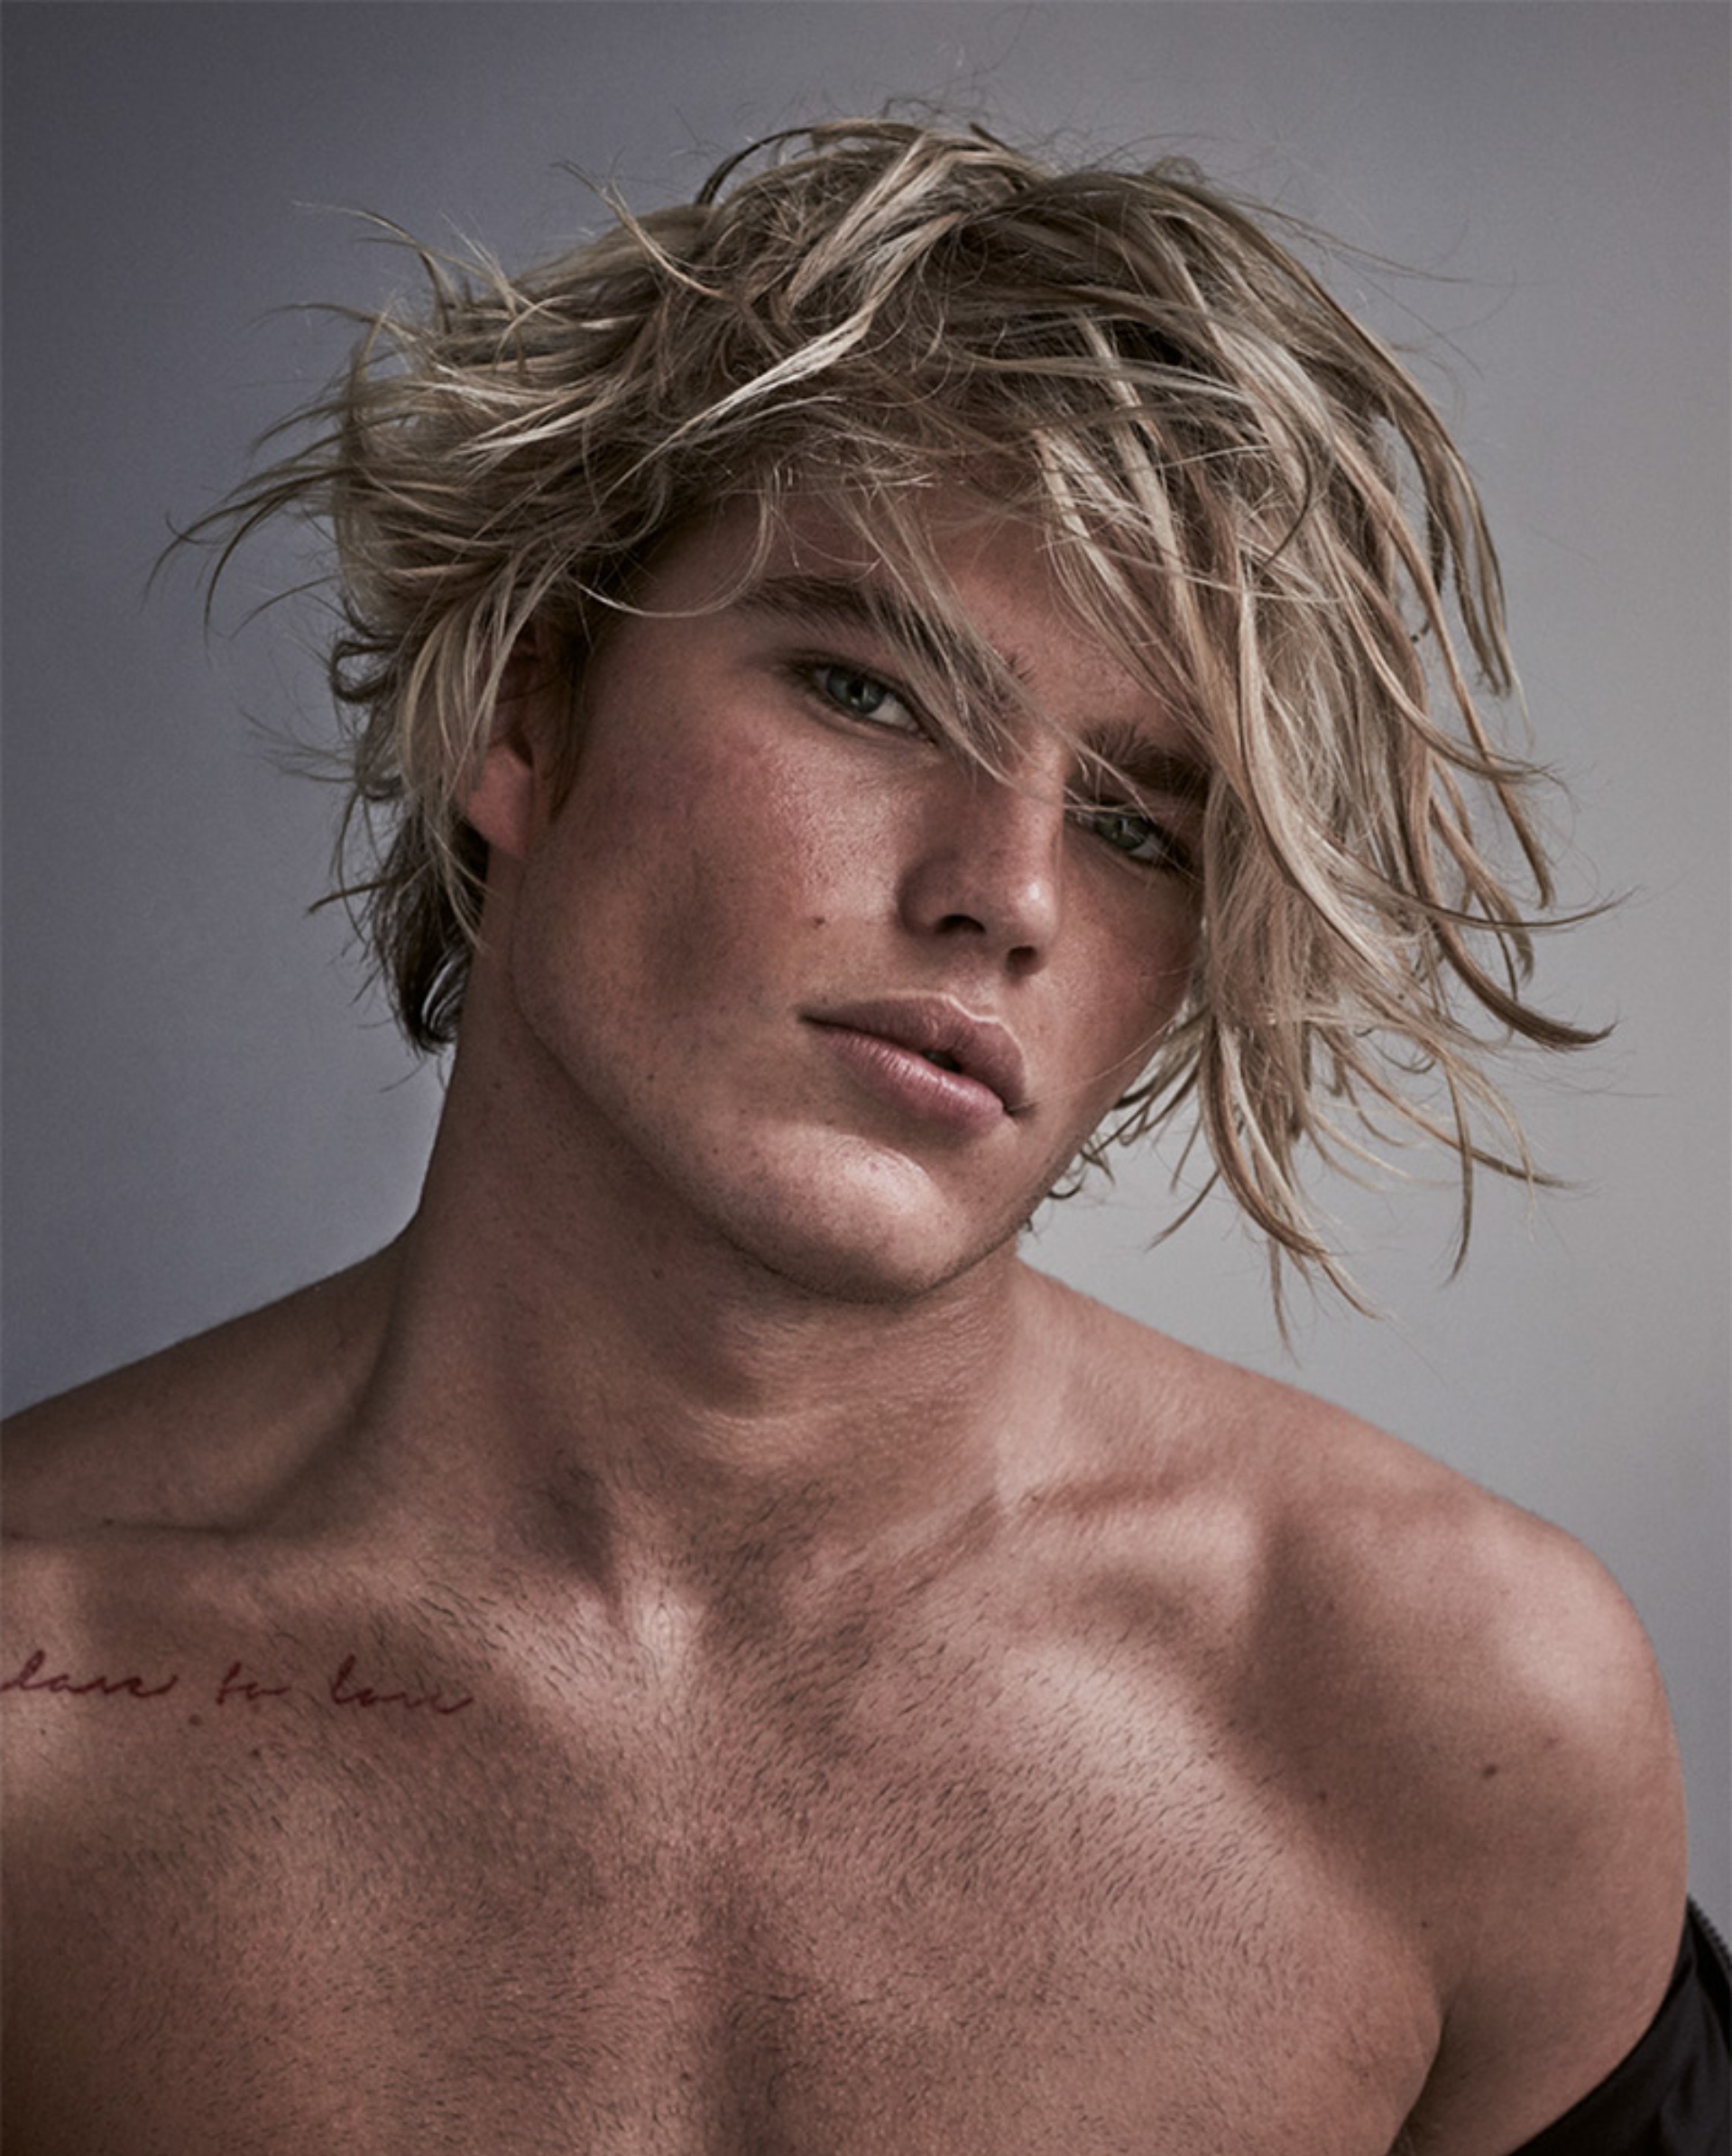 Jordan Barrett el joven modelo con un rostro exótico